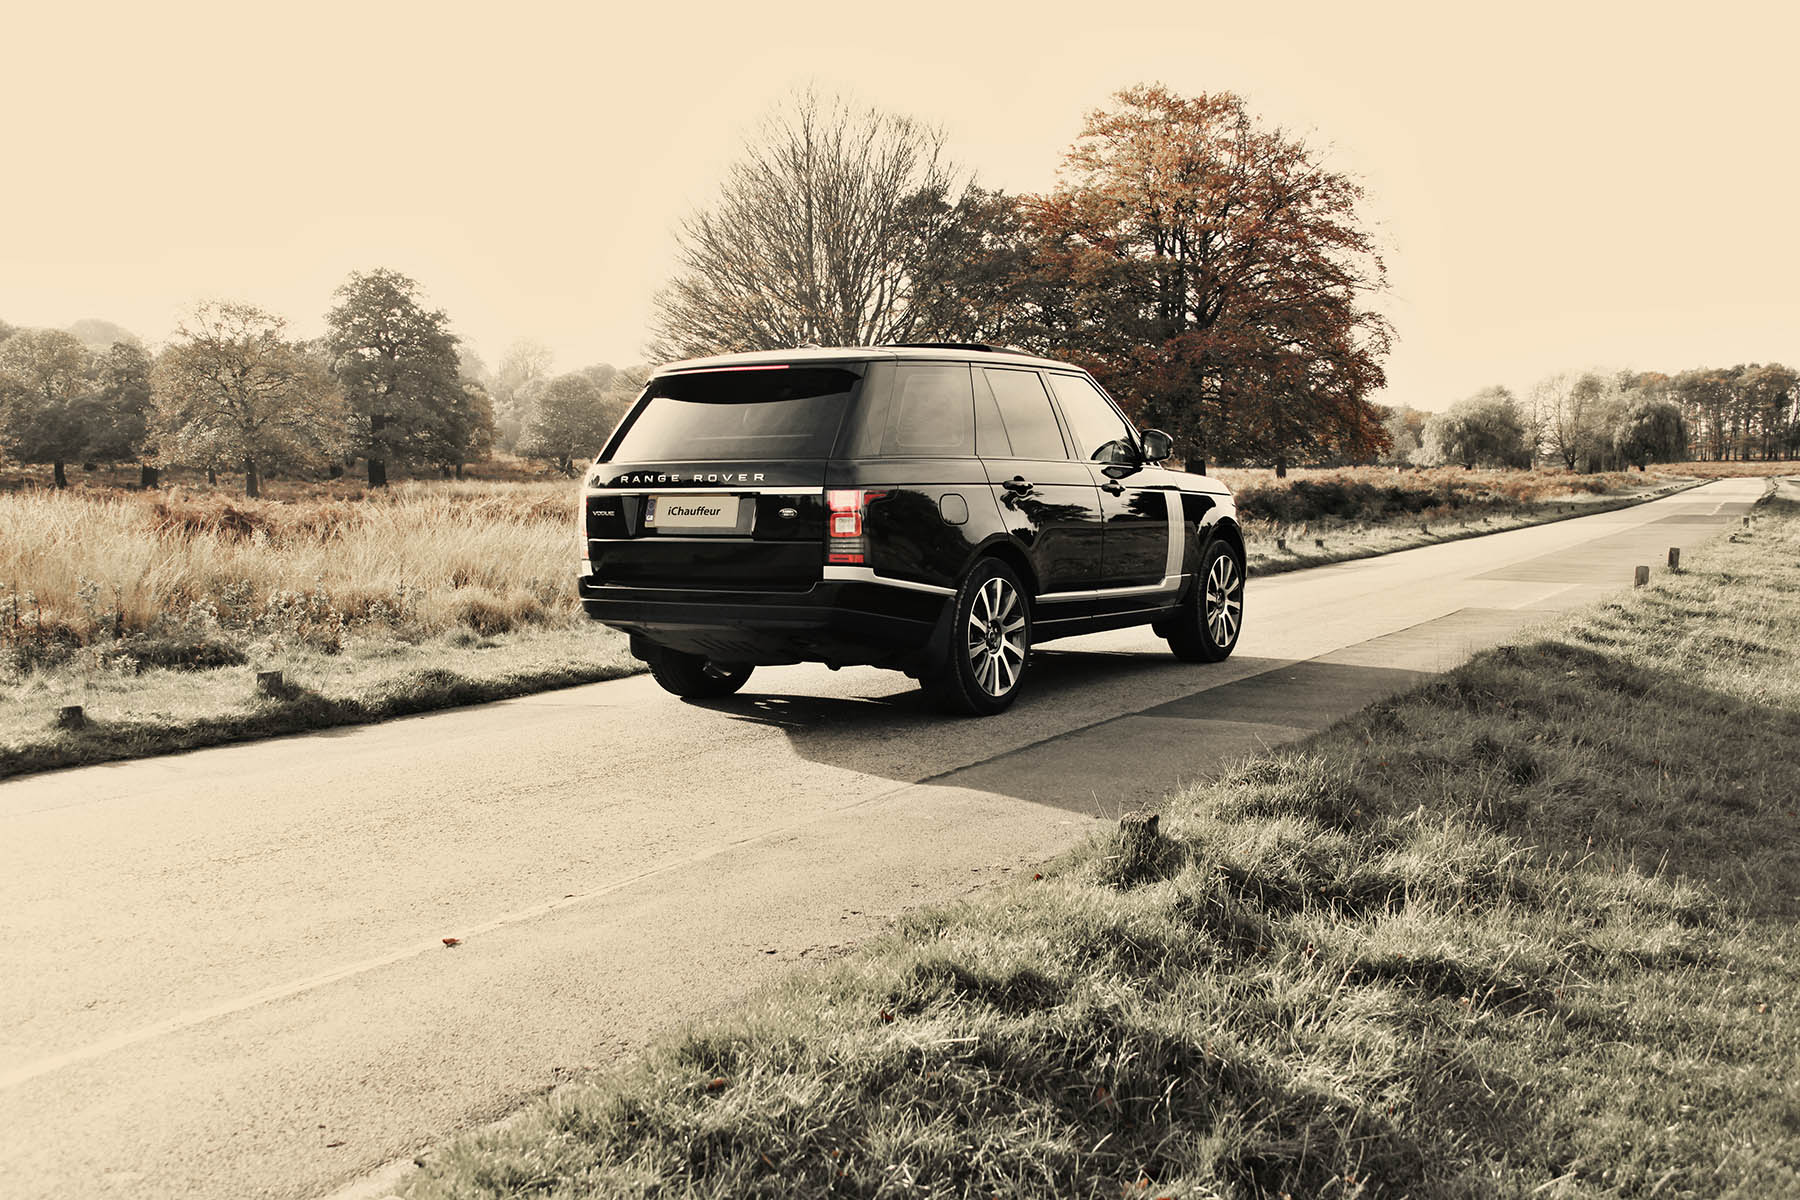 Range Rover rear view